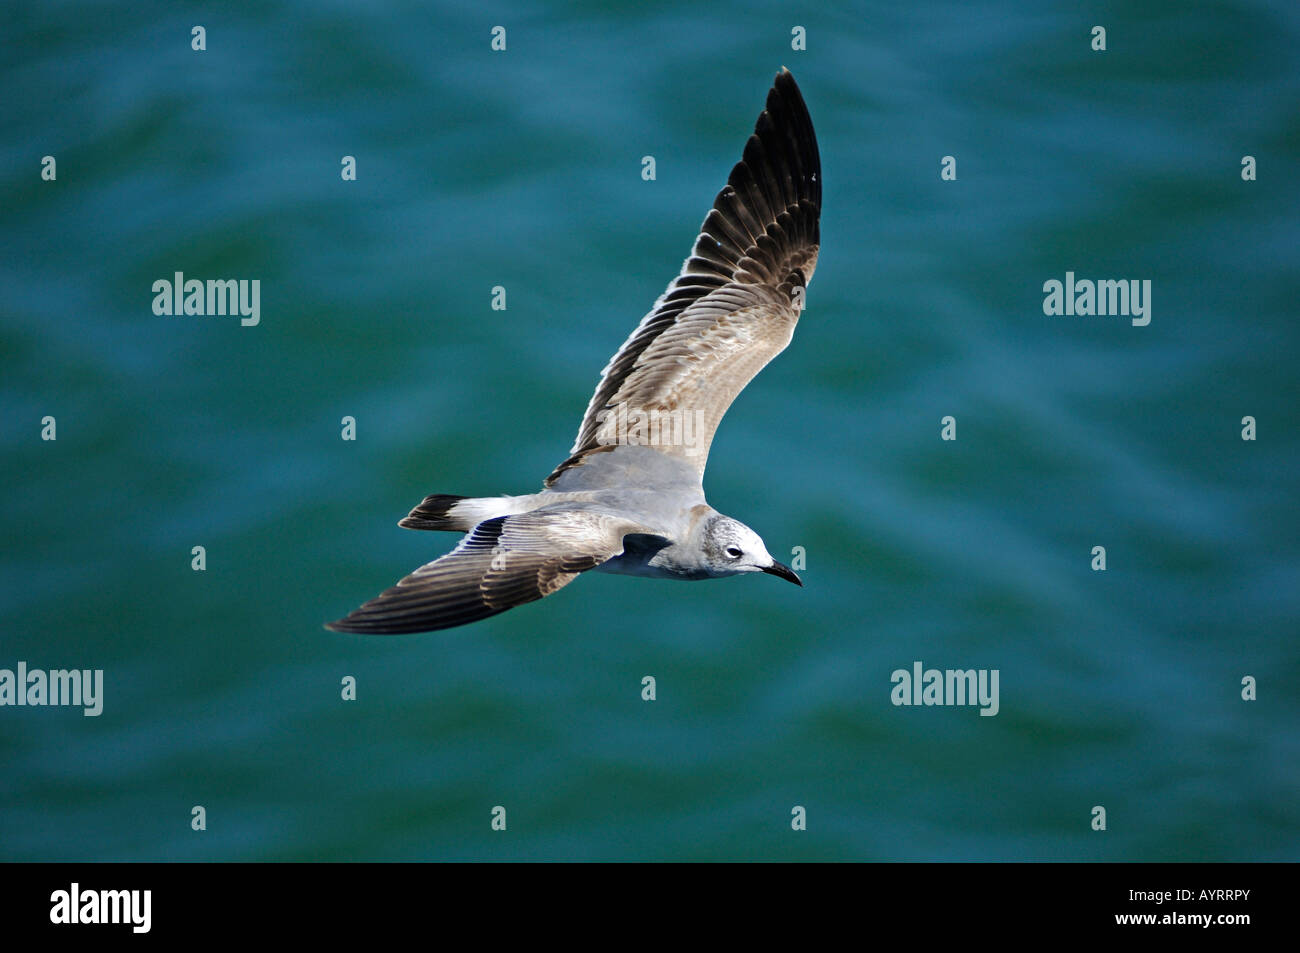 Flying seagull, Costa Rica, America Centrale Foto Stock